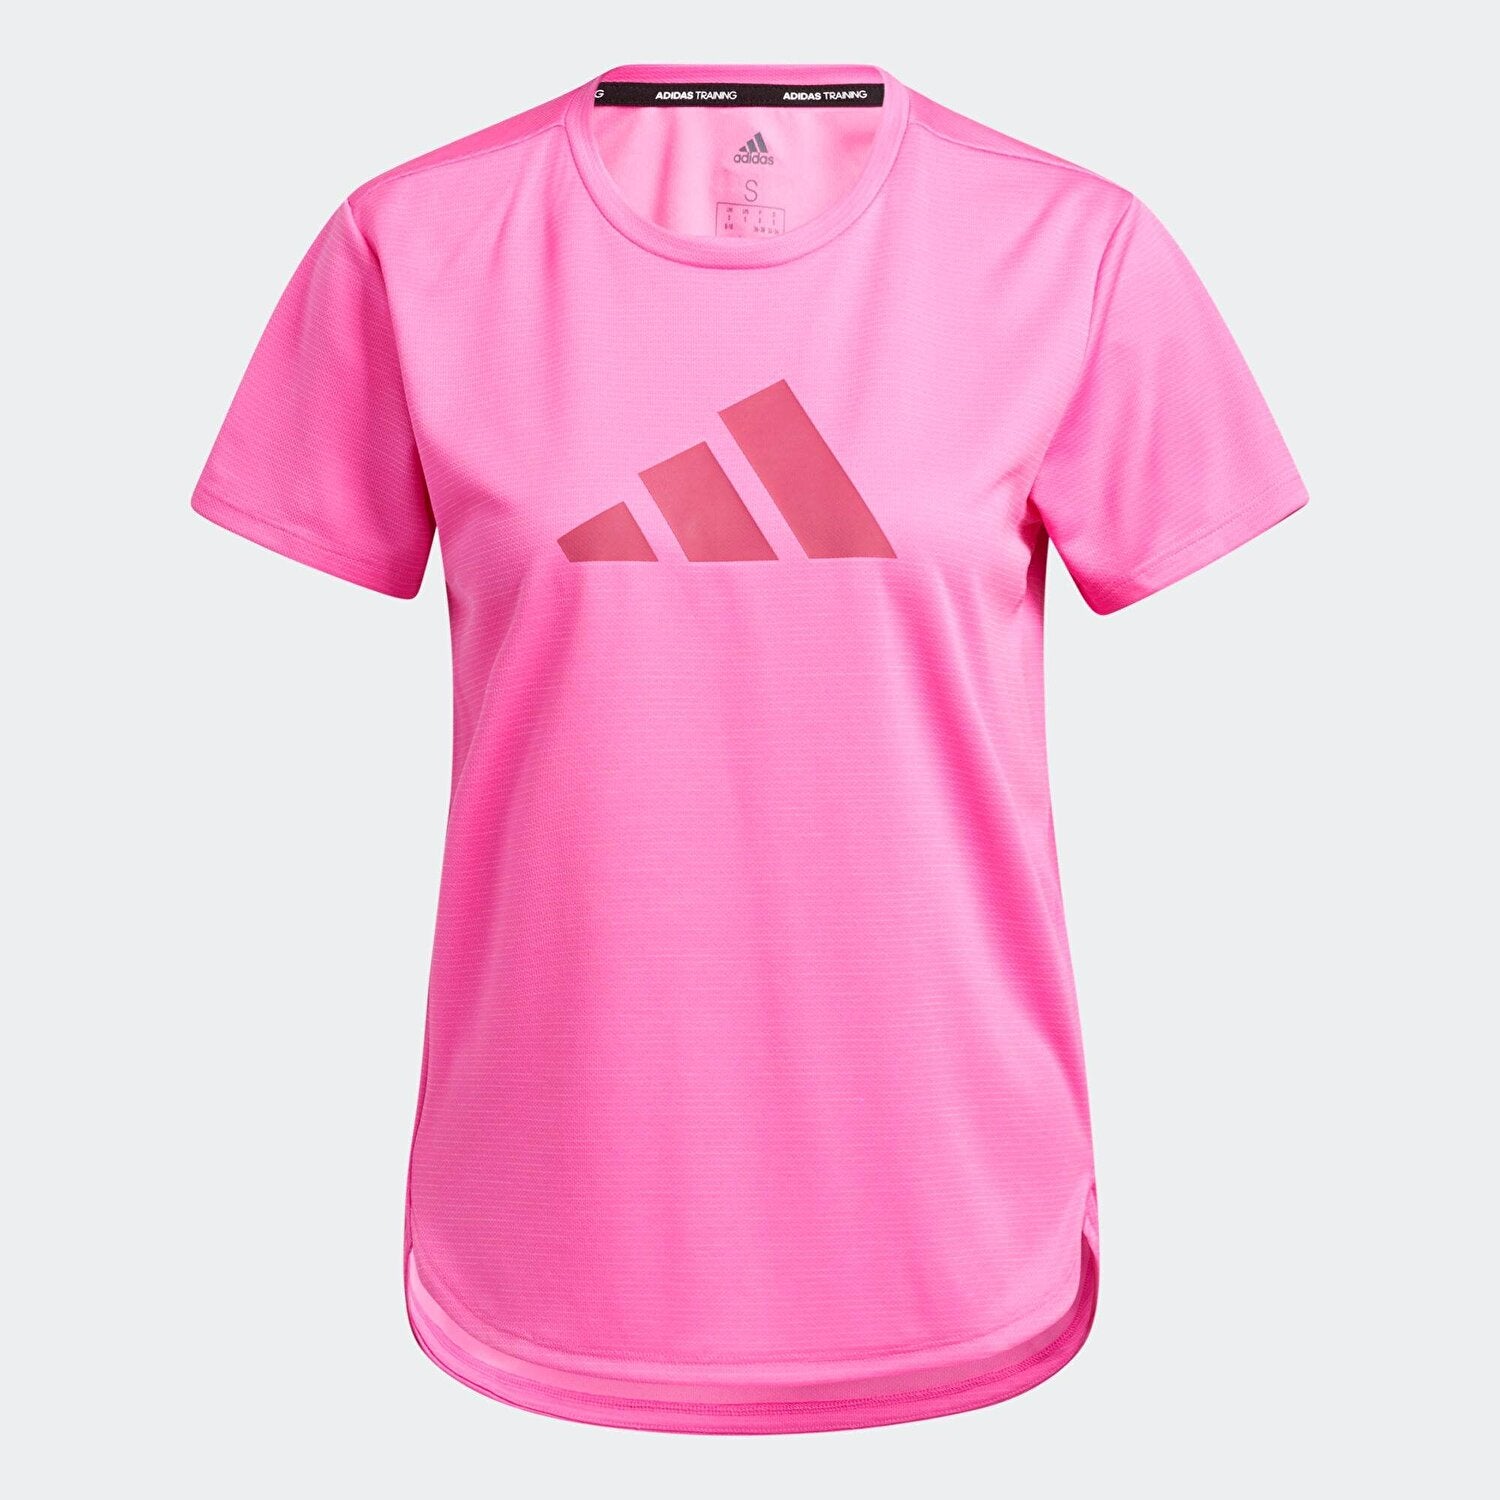 Adidas women future icons T-shirt